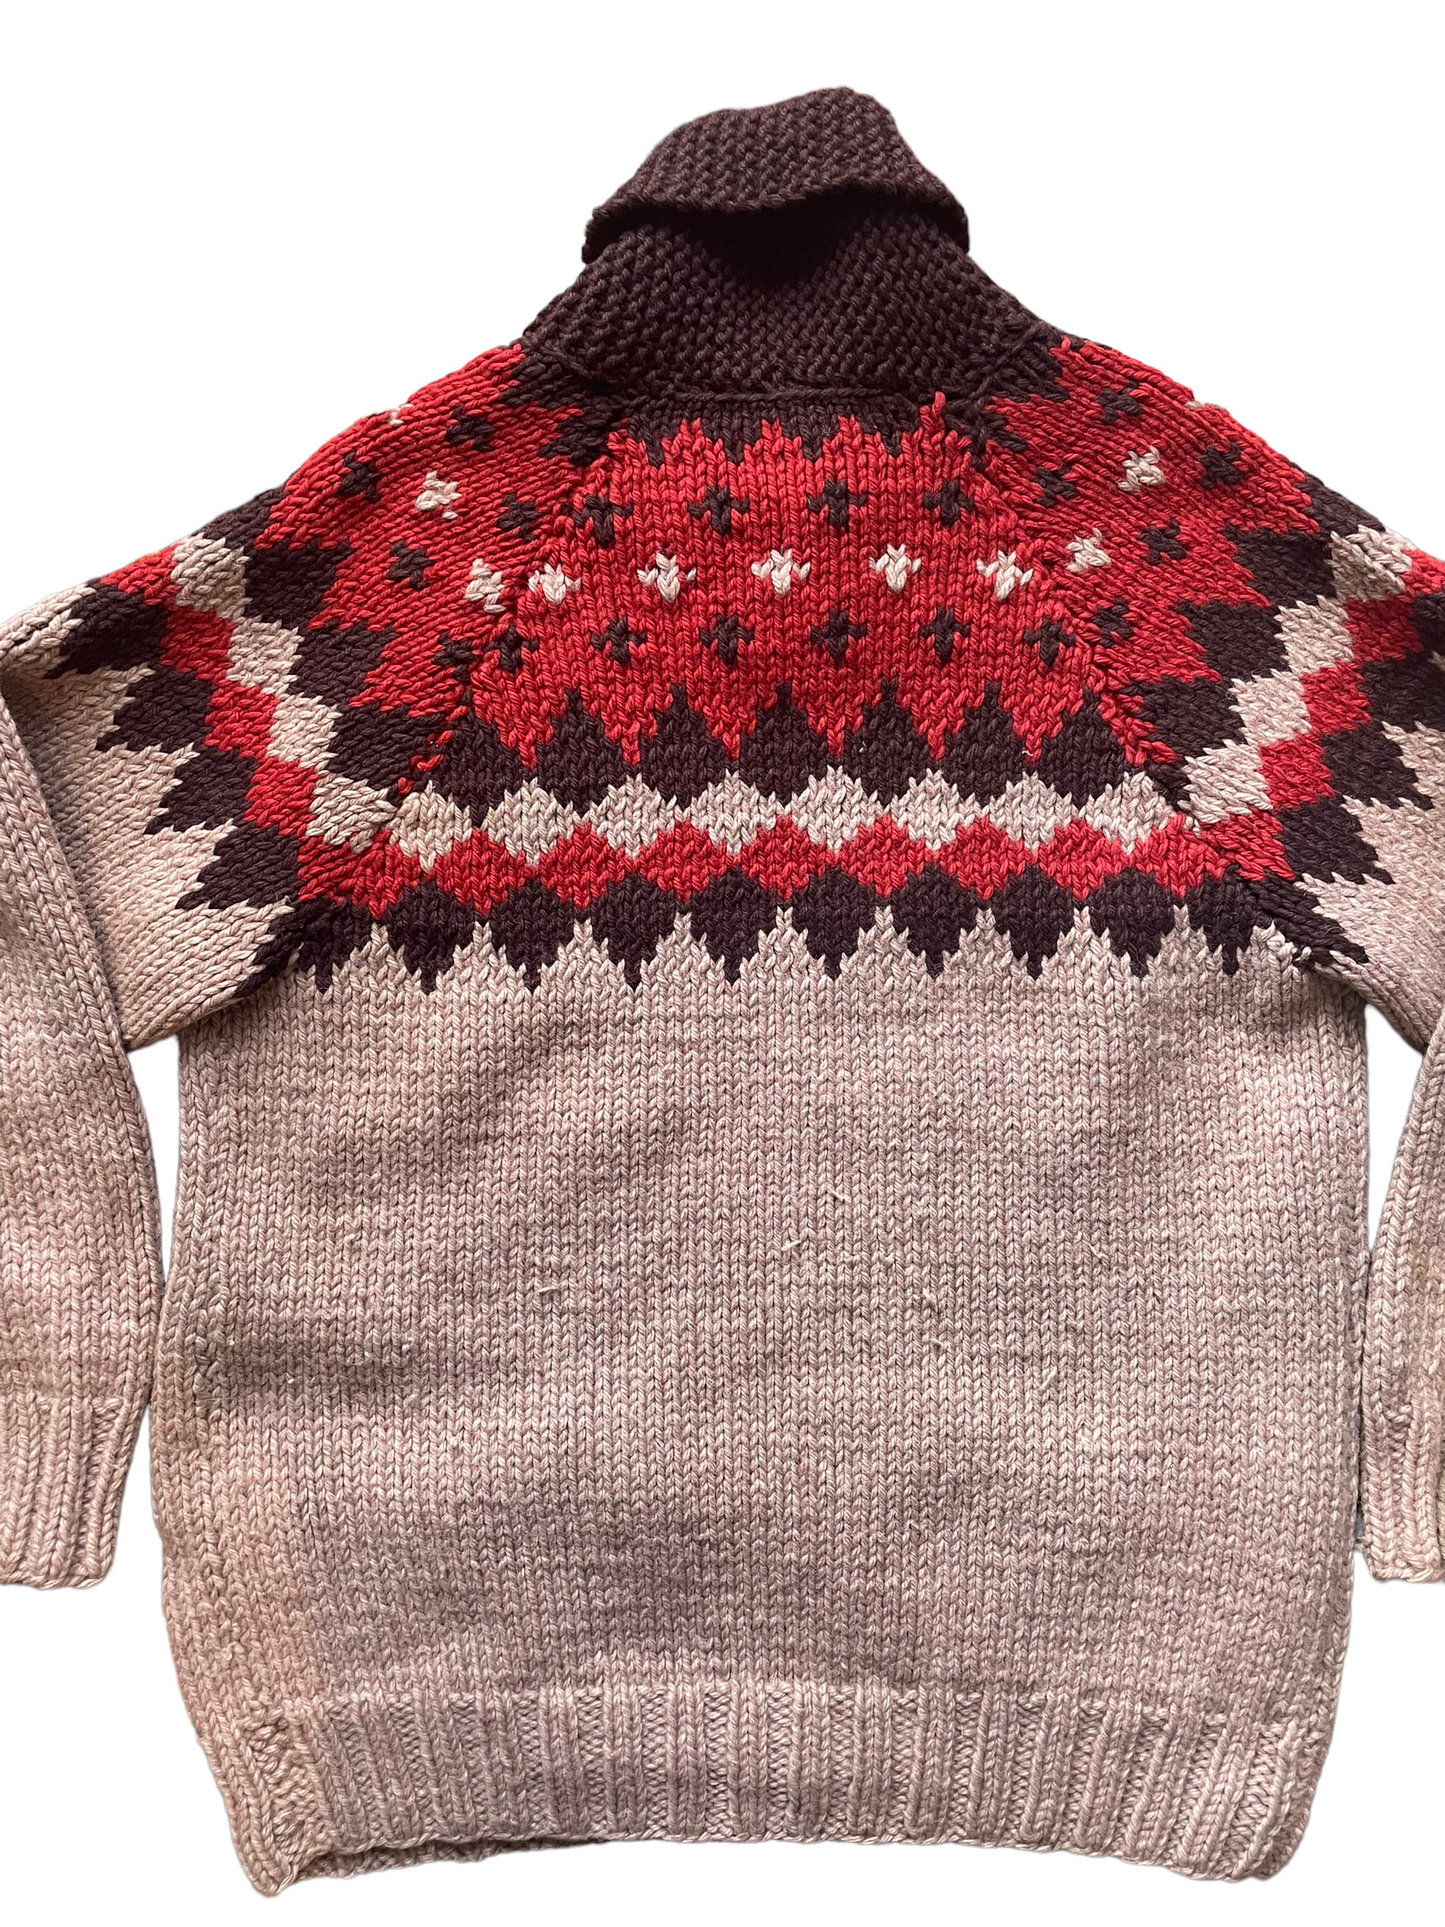 Full back view Vintage 1950s Cowichan Style Wool Cardigan |  Barn Owl Vintage | Seattle Vintage Sweaters